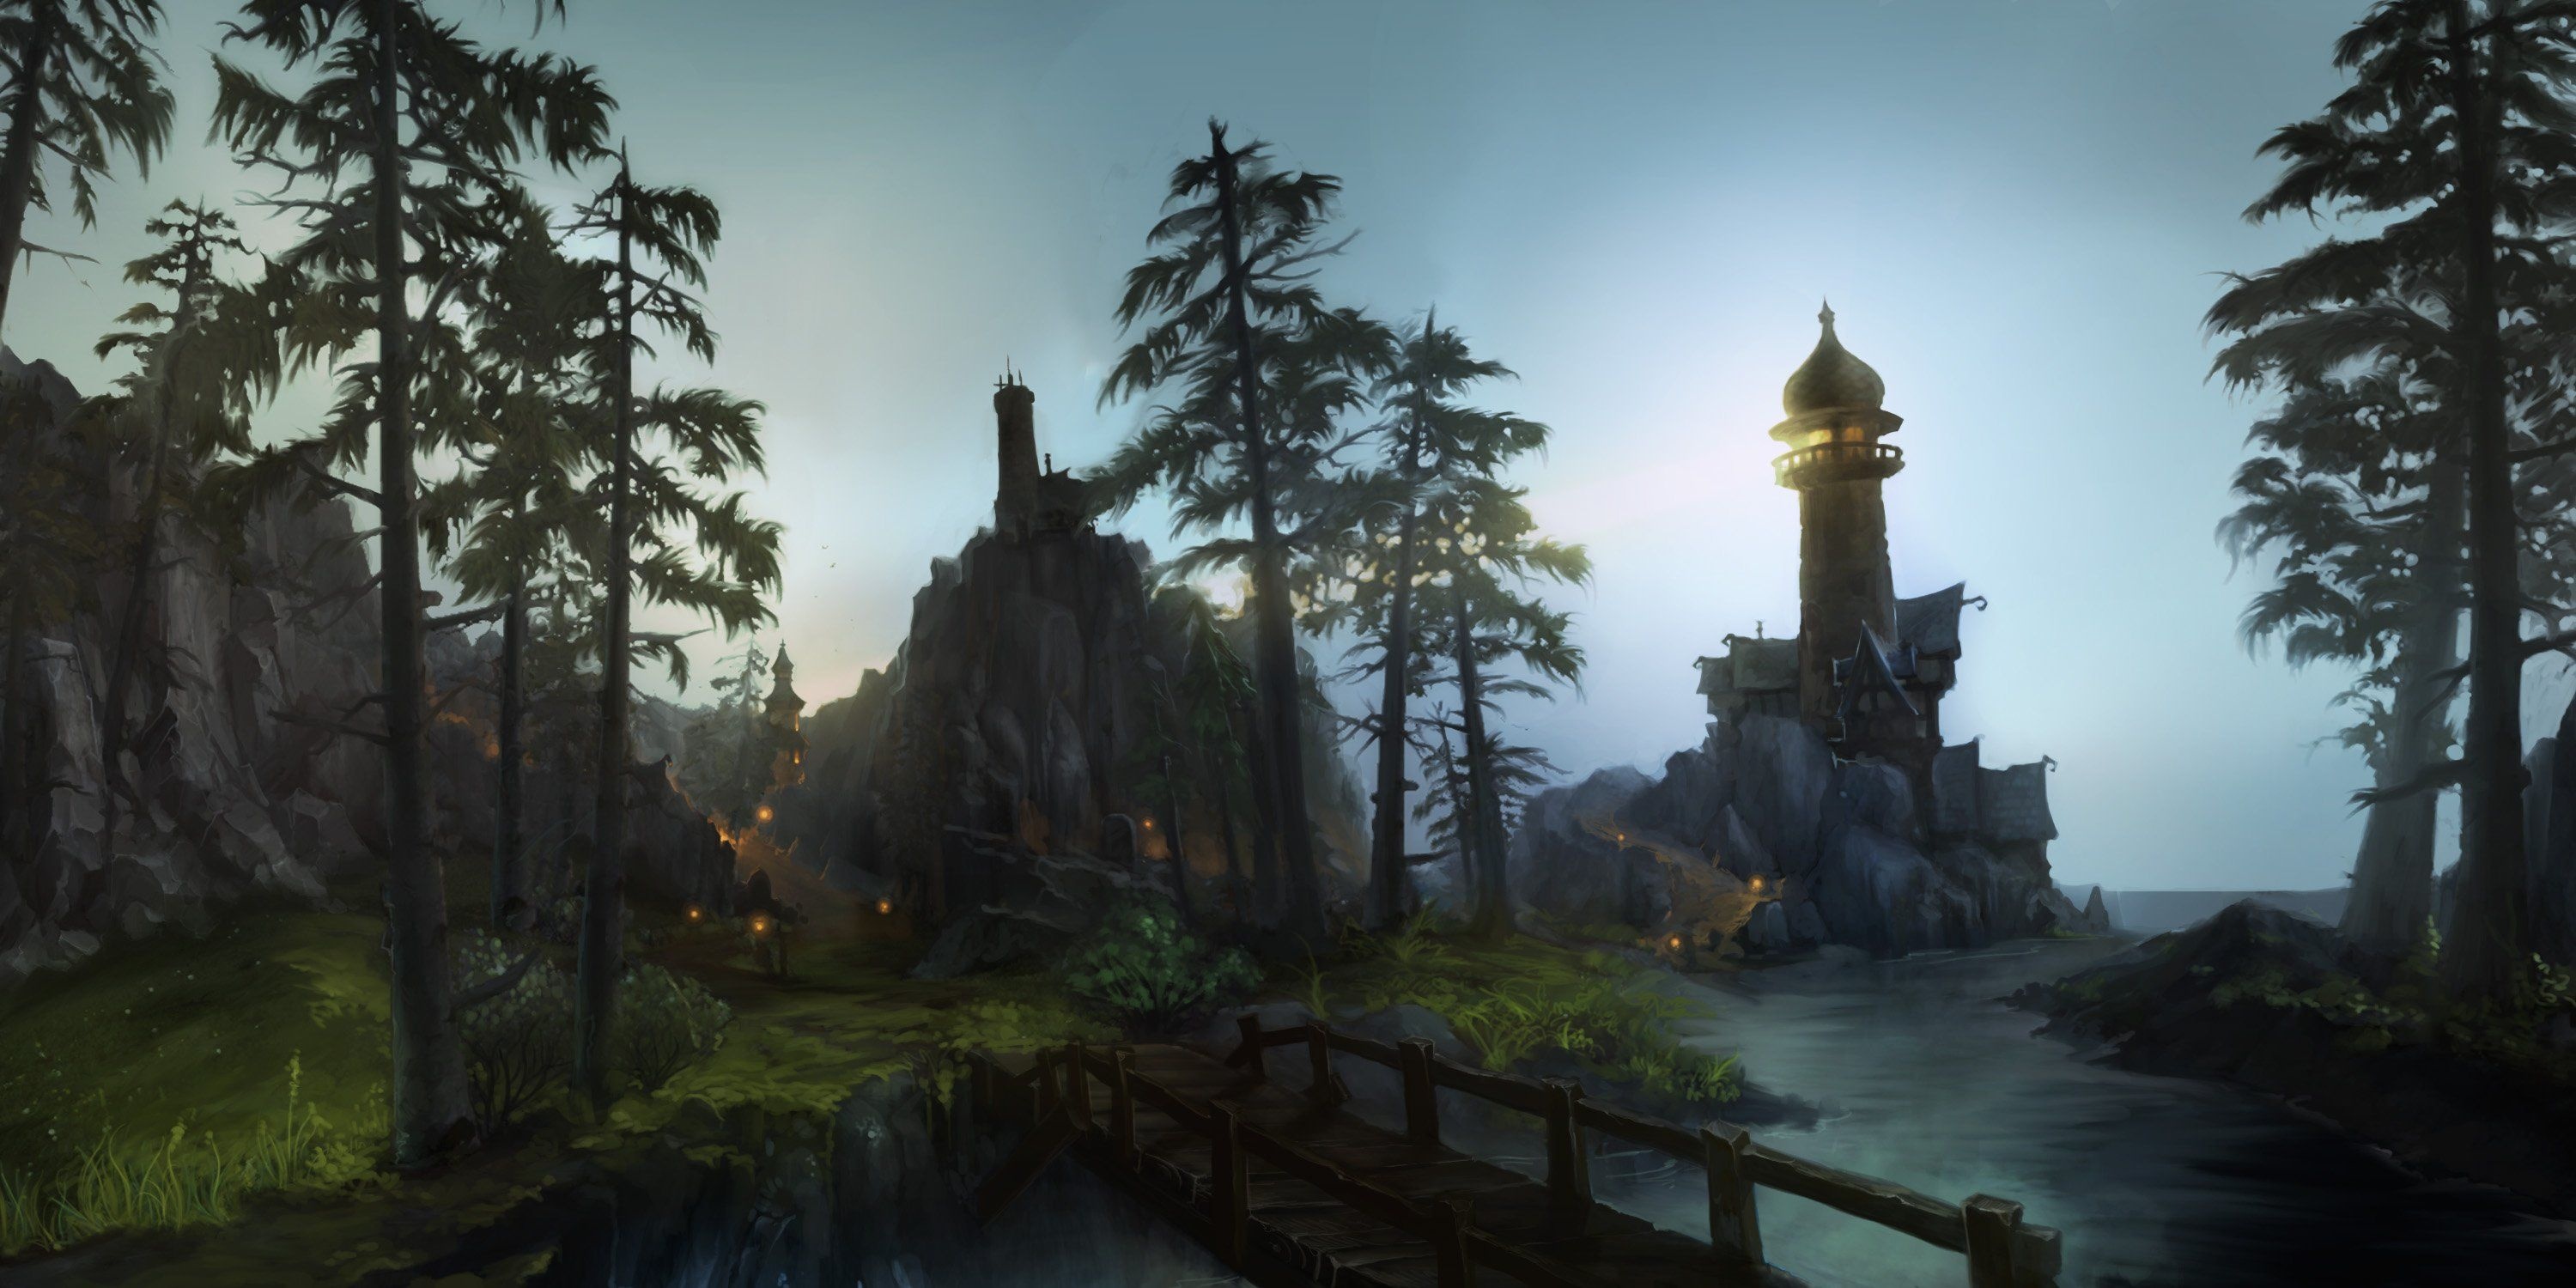 Warcraft scenery, Pandaria beauty, Azeroth exploration, WoW serenity, Lush landscapes, 3000x1500 Dual Screen Desktop